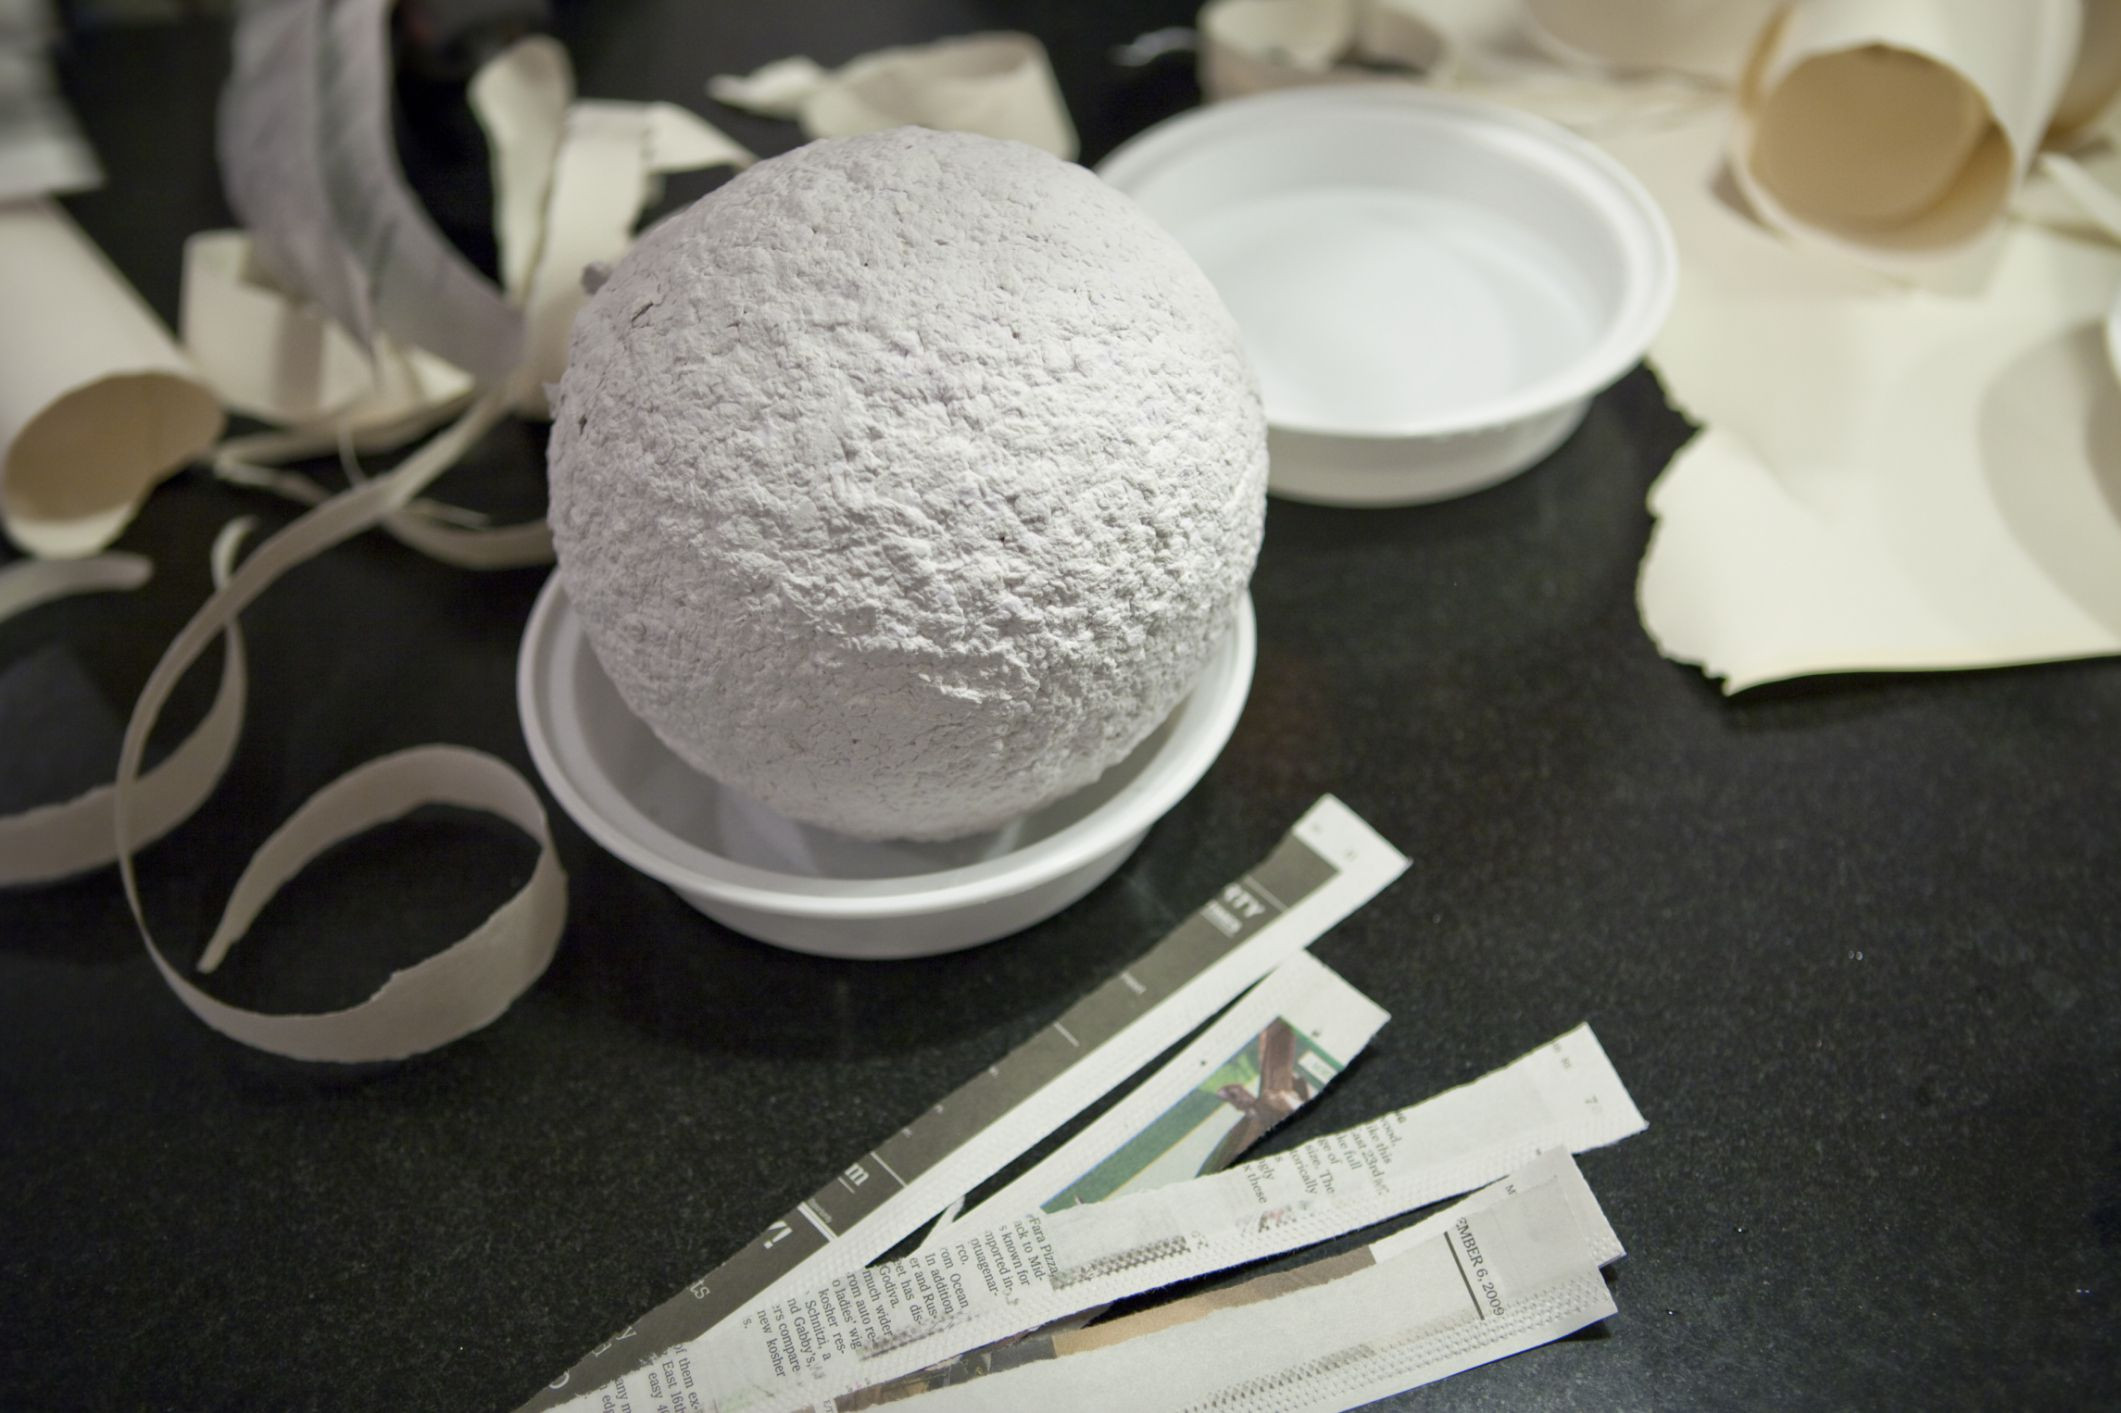 Best ideas about DIY Paper Mache
. Save or Pin DIY Paper Mache Paste Recipes Now.